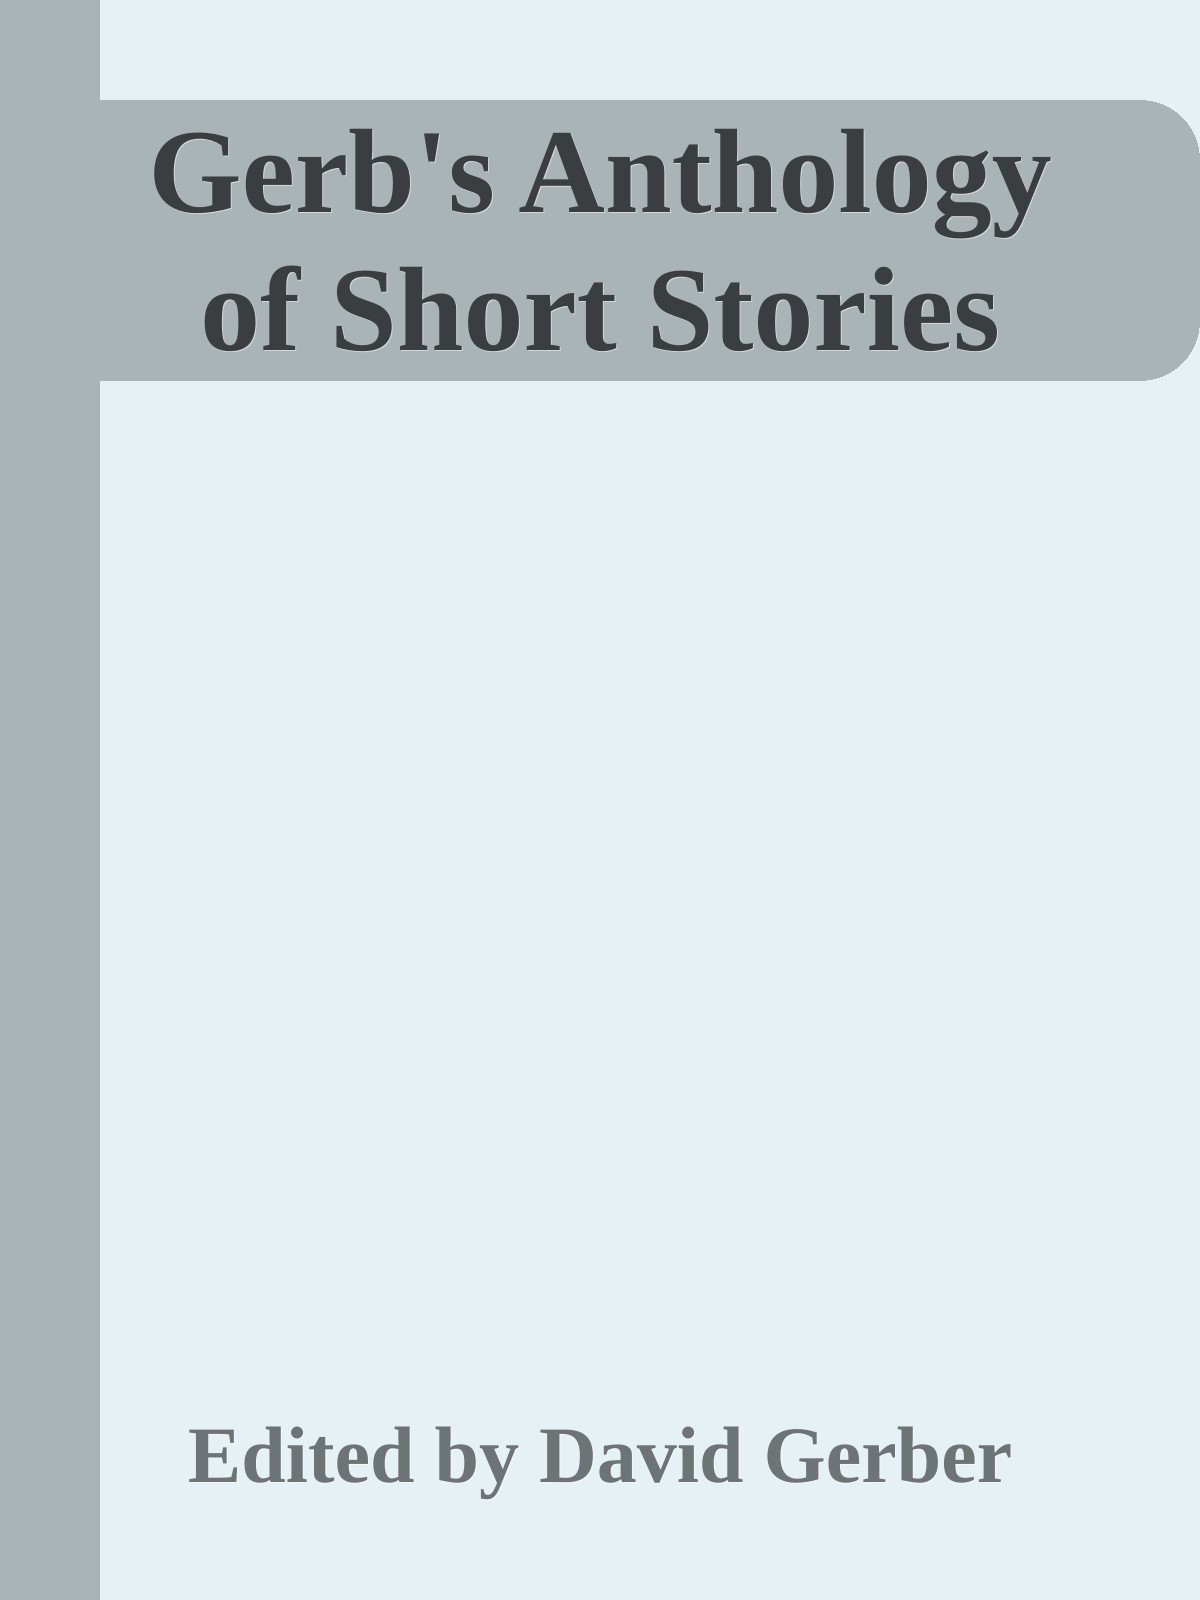 Learning Resources: Short Storieslink